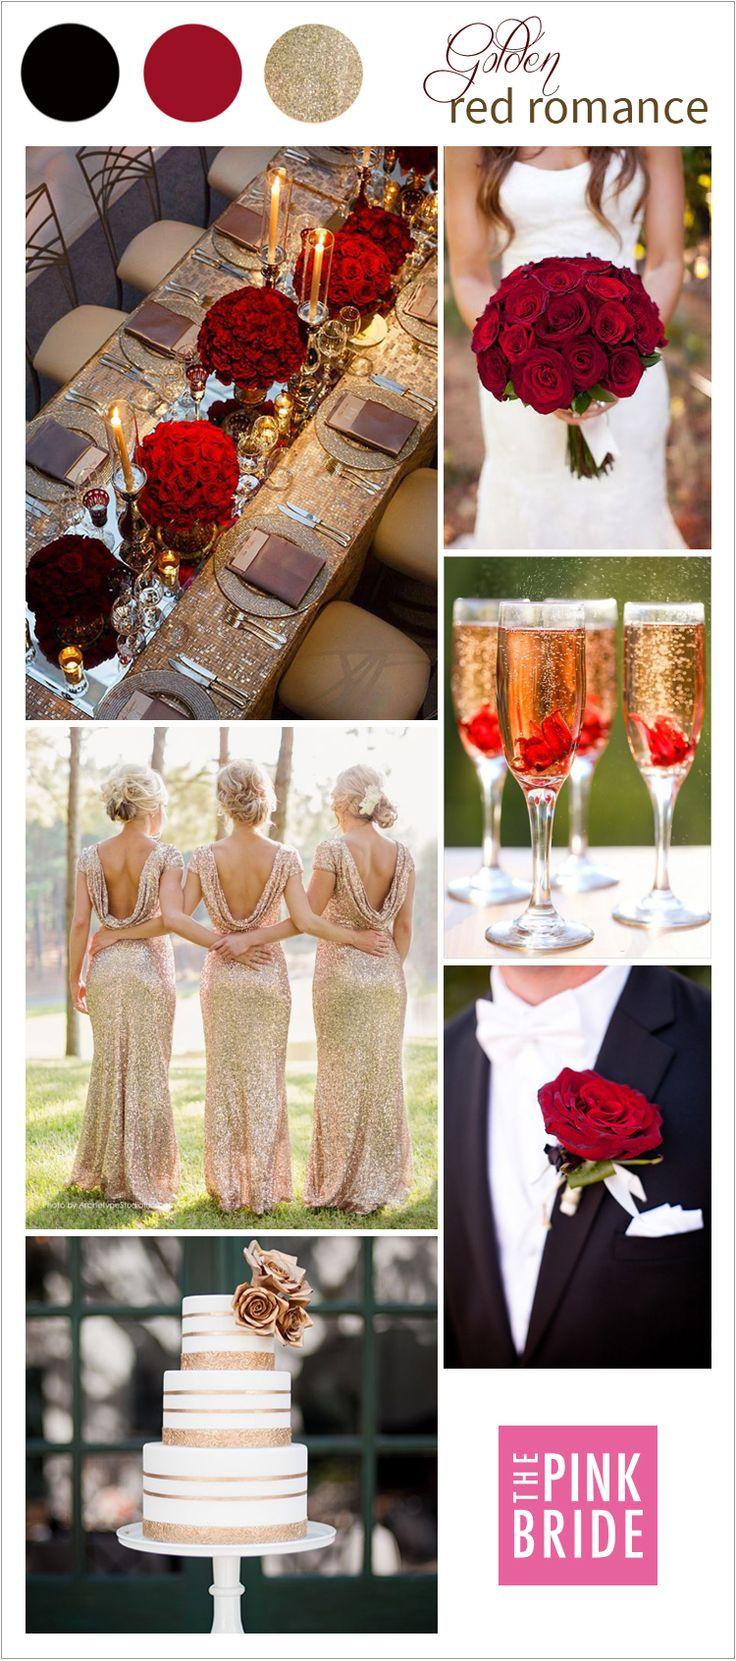 زفاف - Wedding Color Board: Golden Red Romance